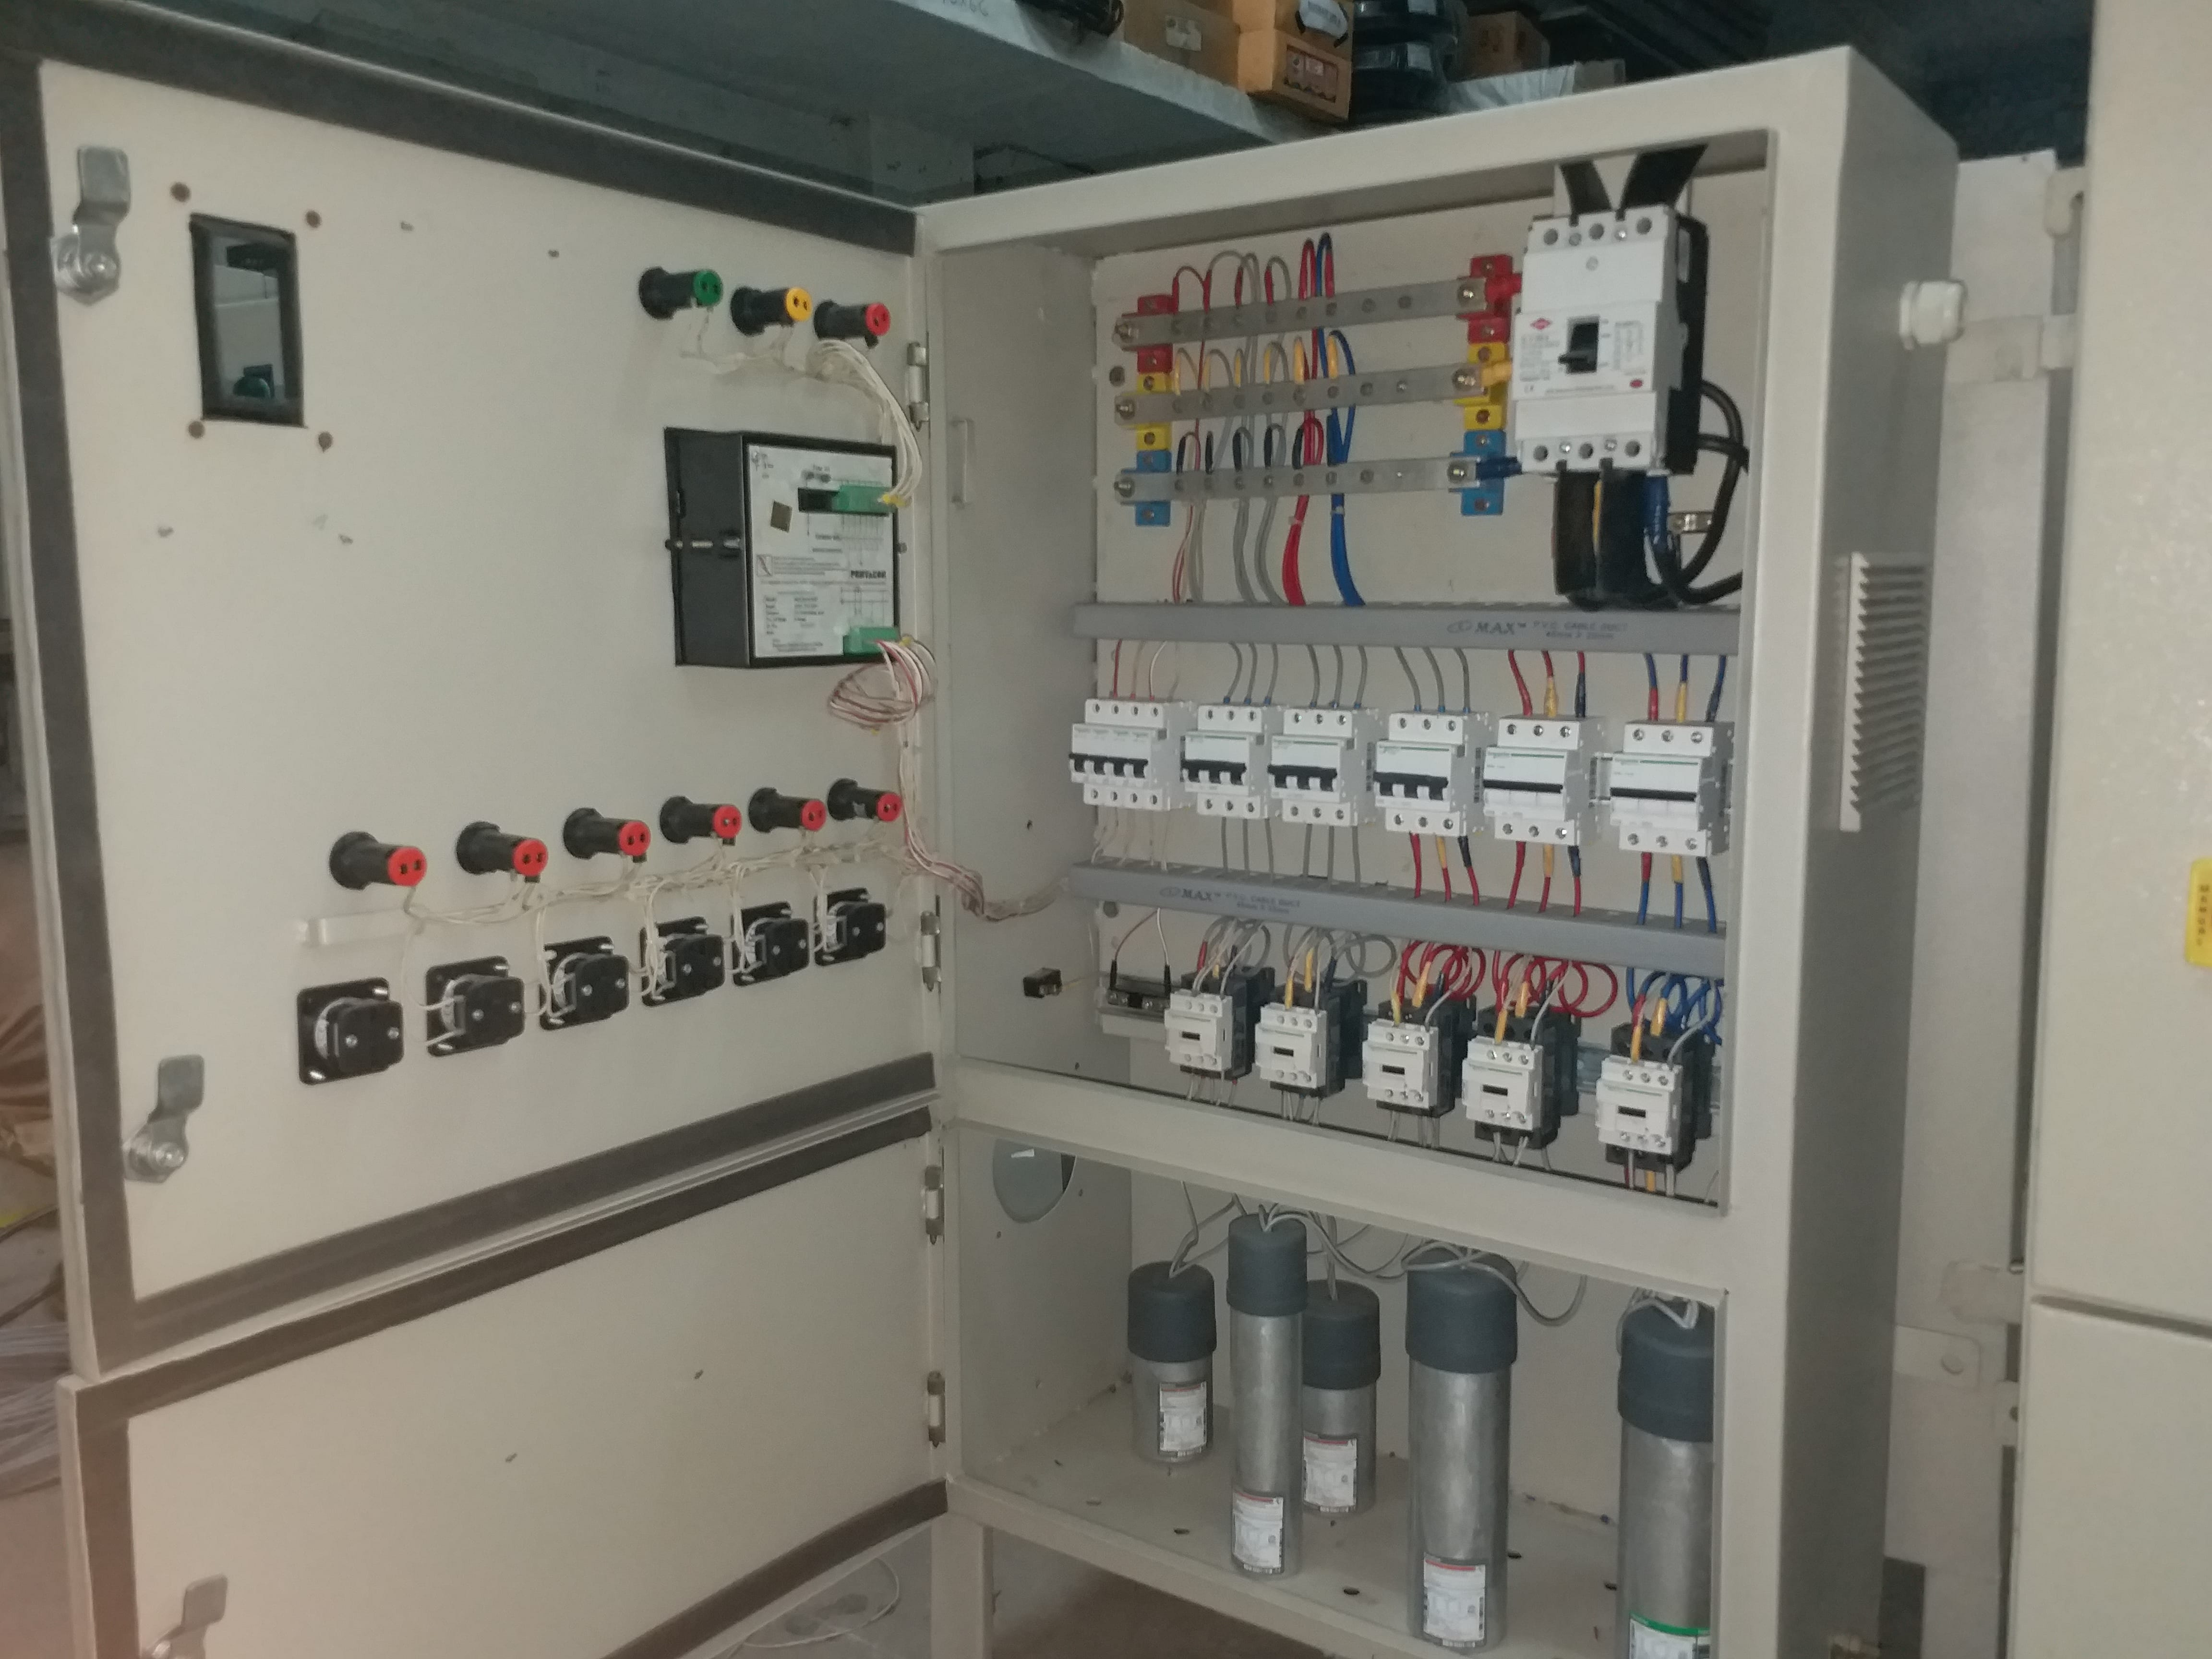 Inside Power Factor Control Panel